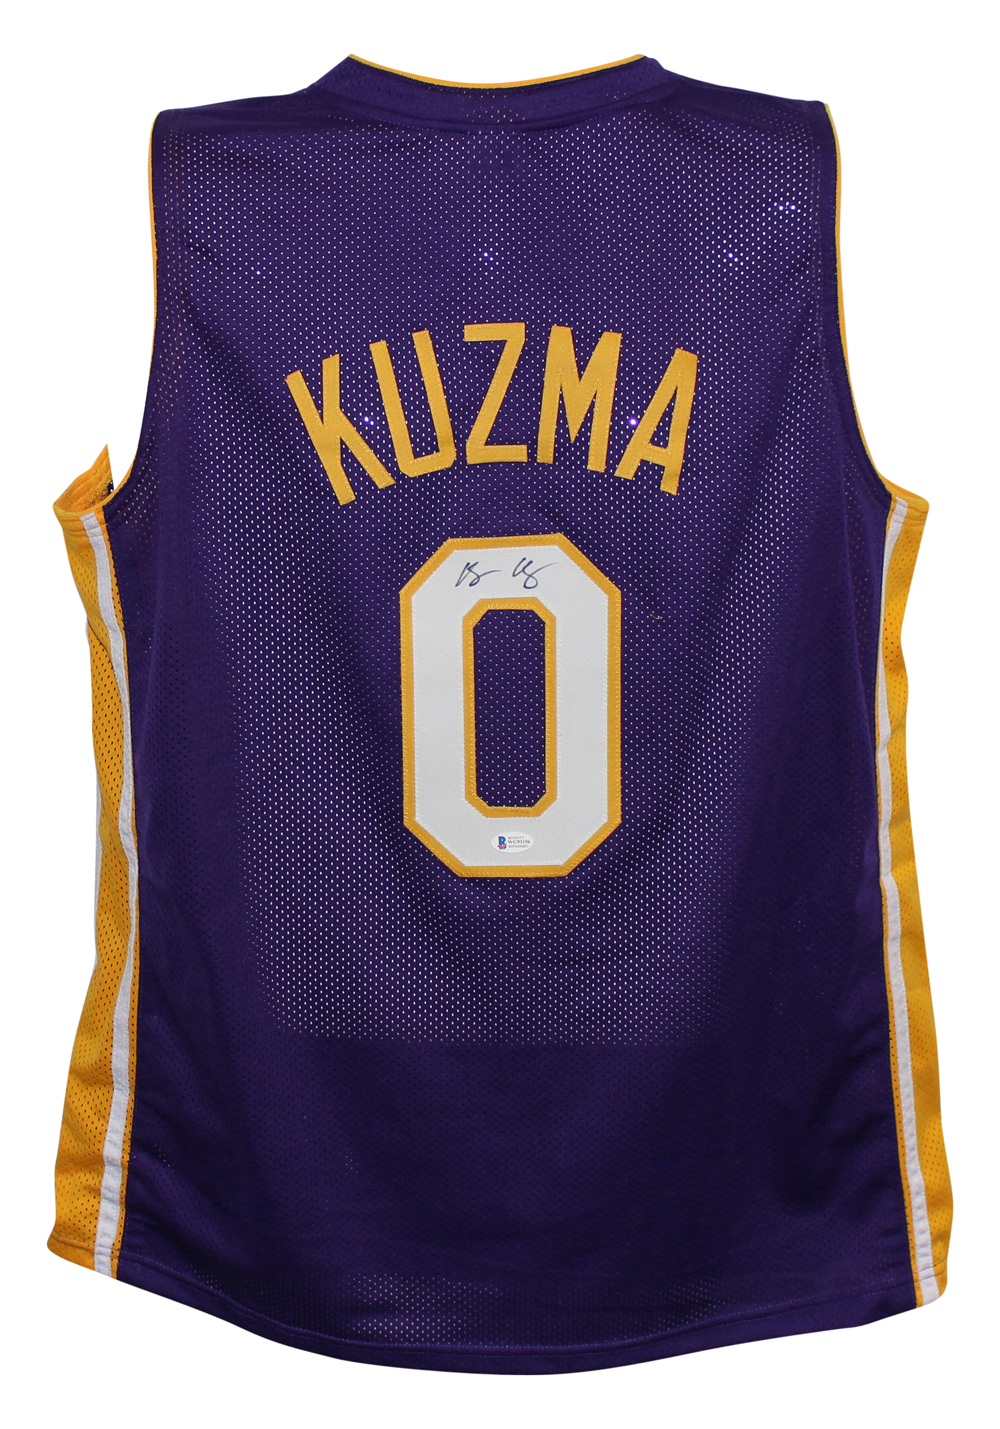 Kyle Kuzma Autographed/Signed Pro Style Purple XL Jersey BAS 31096